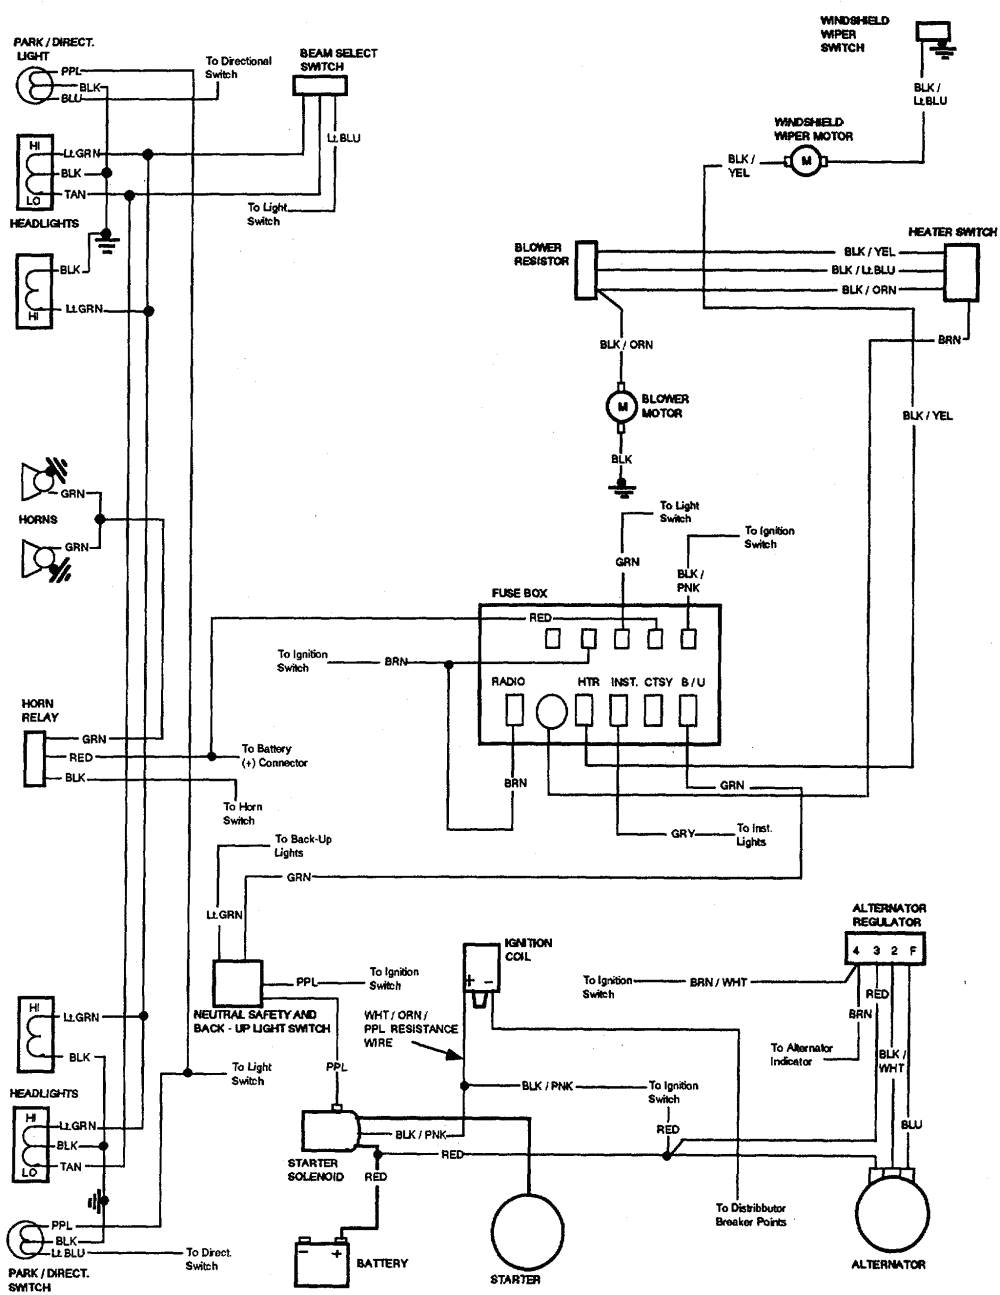 1964 Ford Galaxie Wiring Diagram